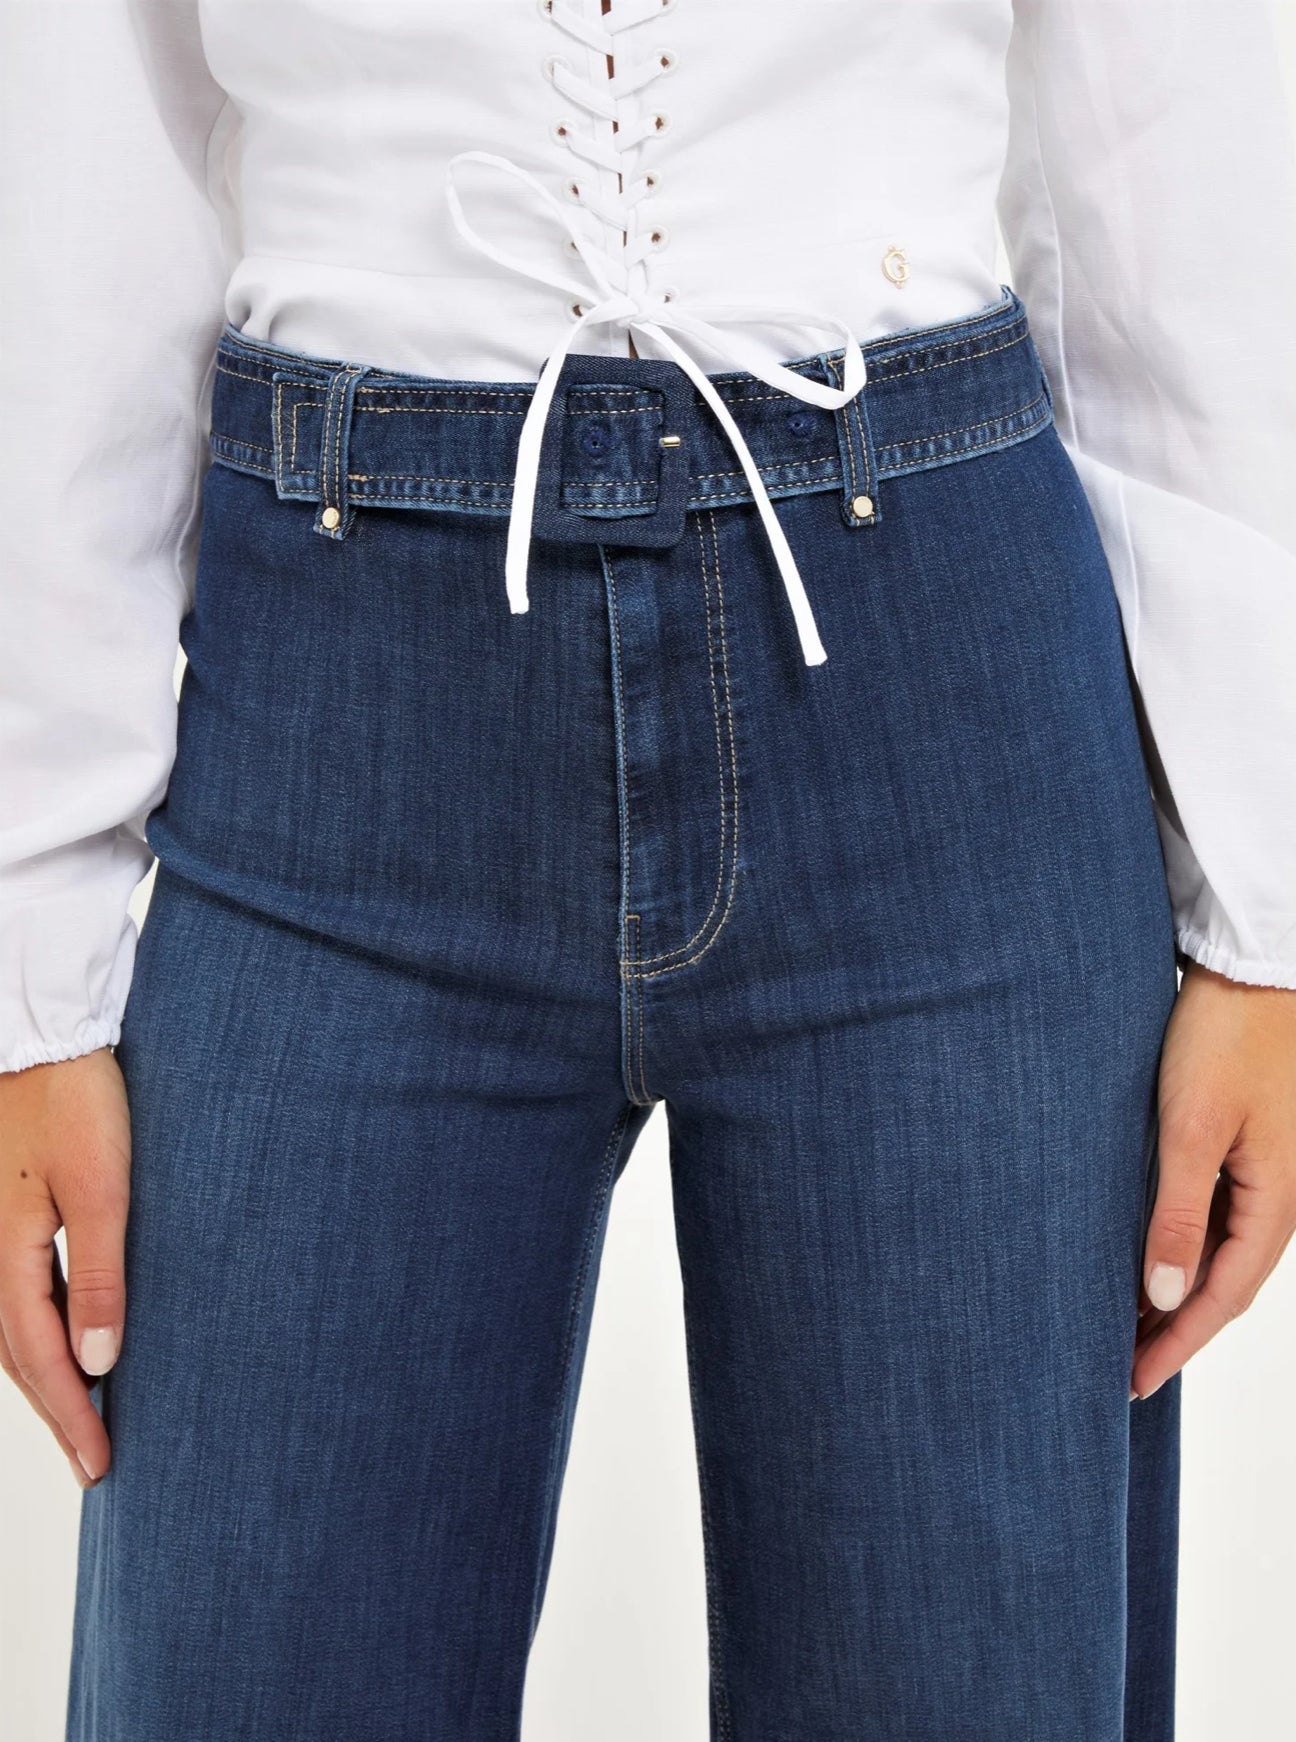 Dakota seamless jeans by Guess - dark wash - Blue Sky Fashions & Lingerie